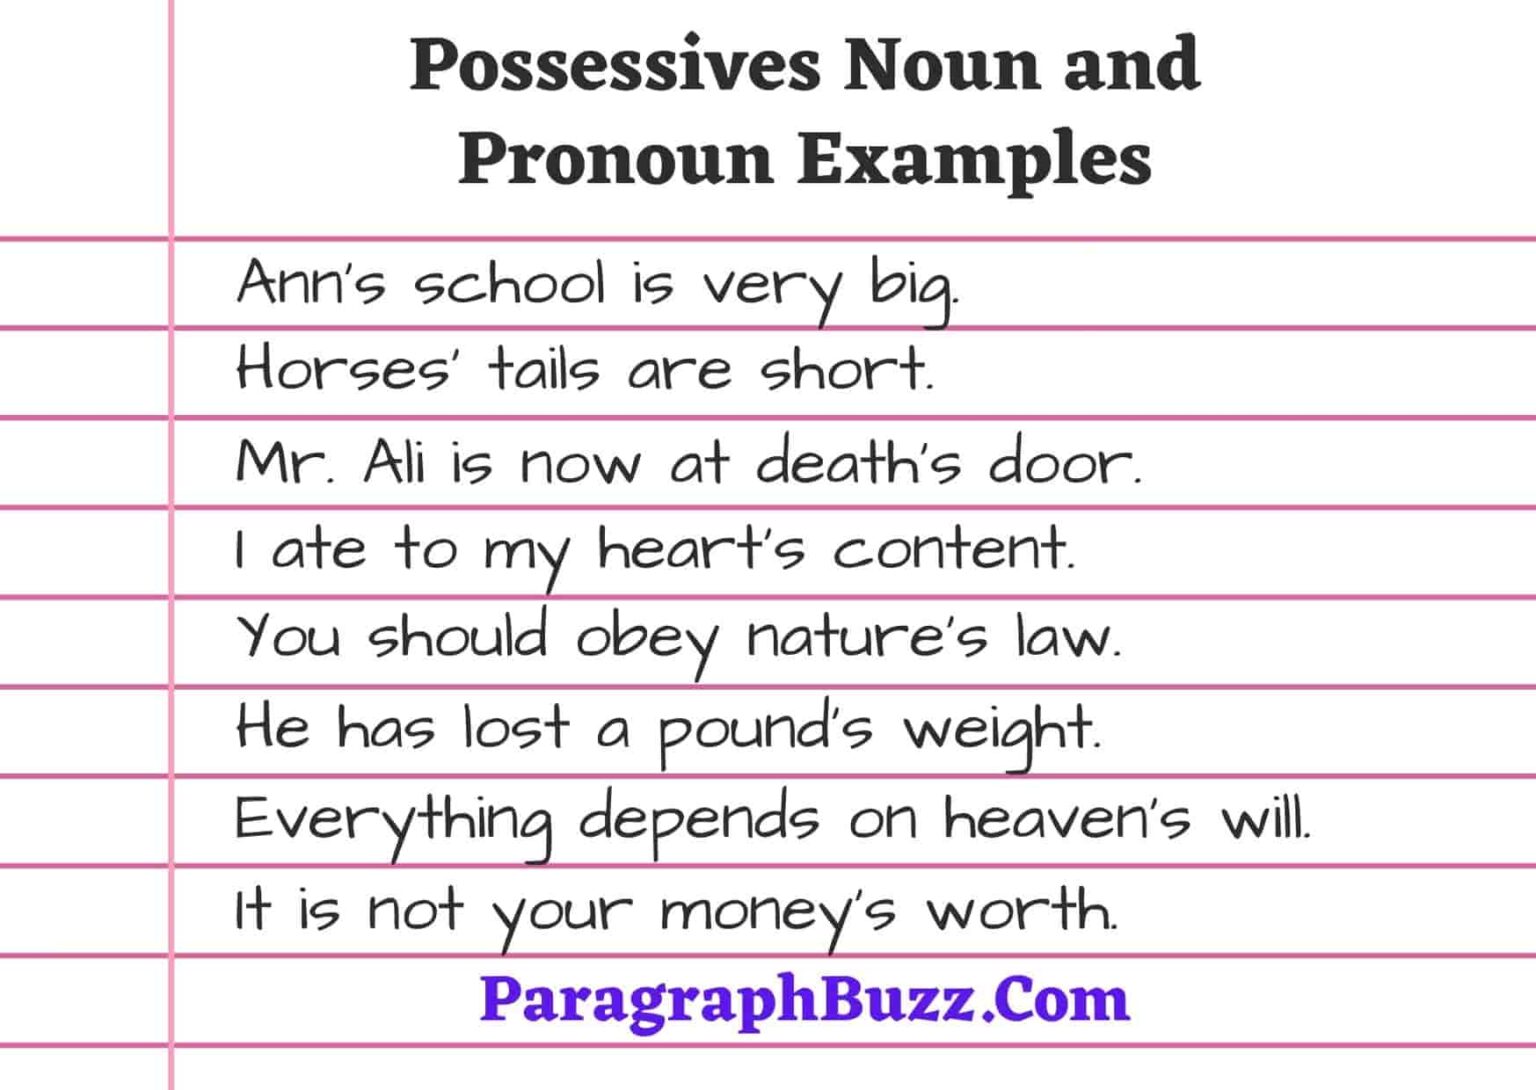 50 Possessives Noun And Pronoun Examples In Sentence